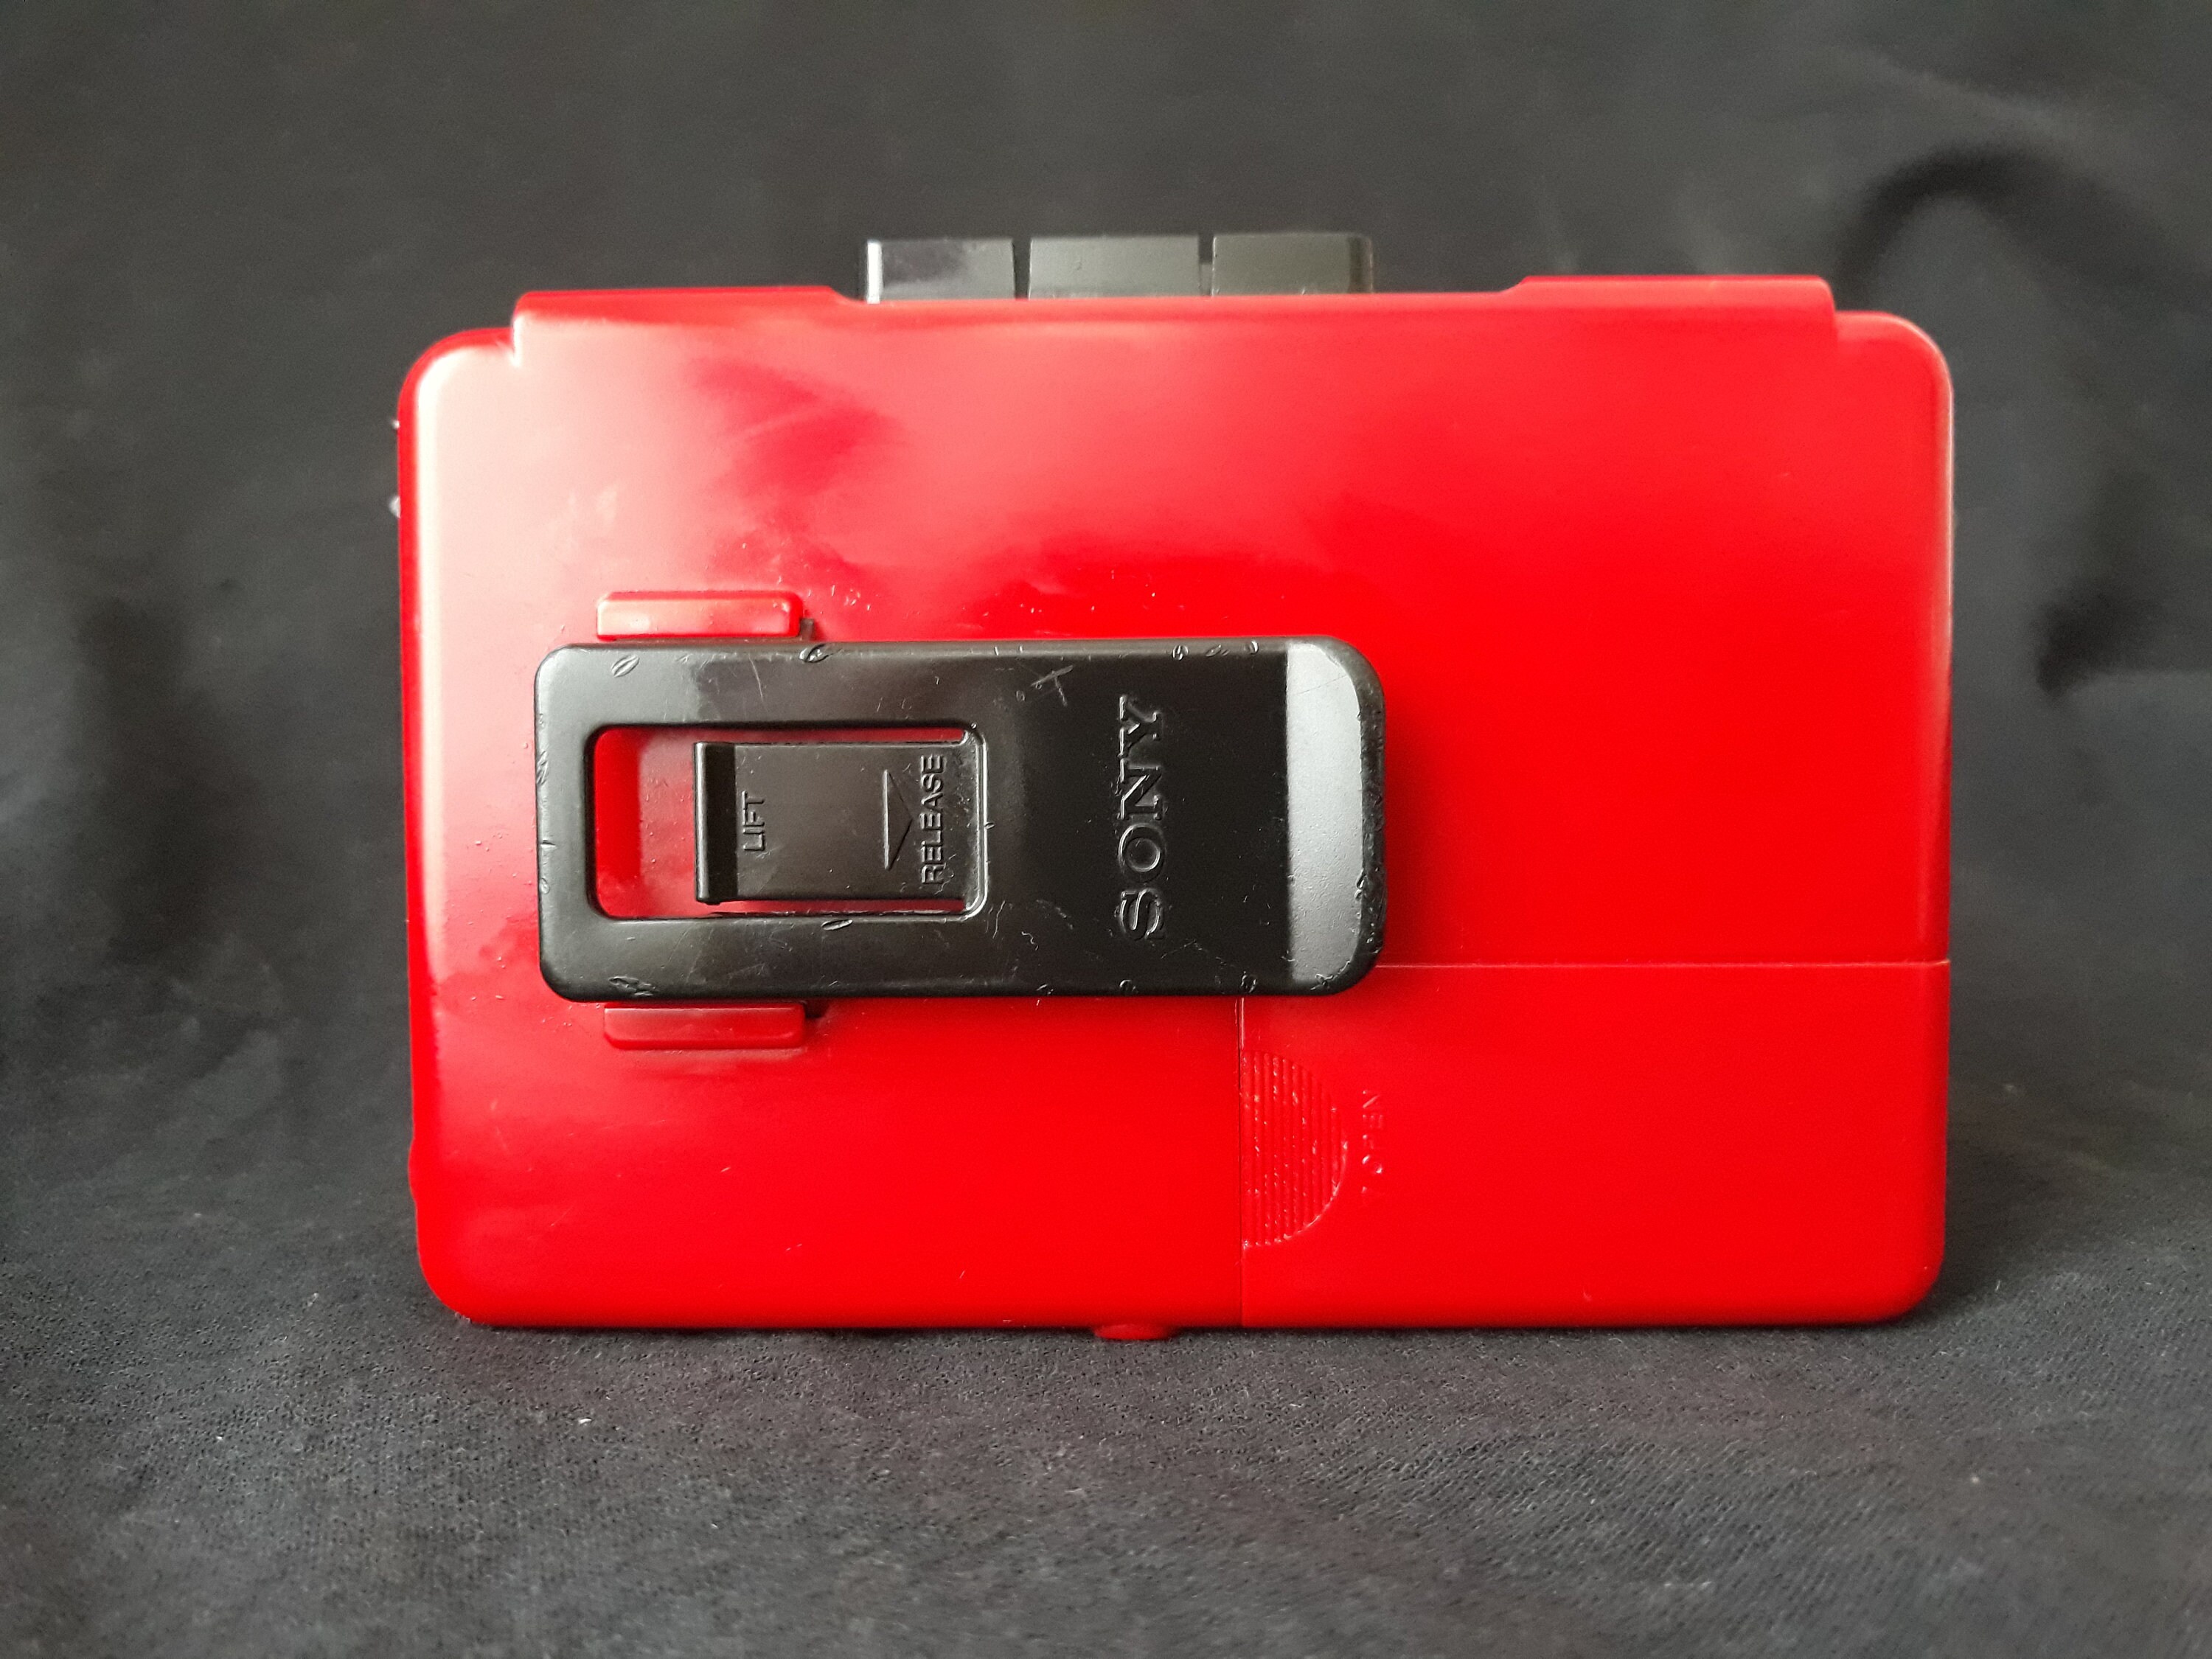 Vintage Rare Sony Walkman Cassette Player, Rare Sony Cassette Player,  Walkman, Sony, Sony Walkman, Sony Cassette Player, WM FX17, Gift 